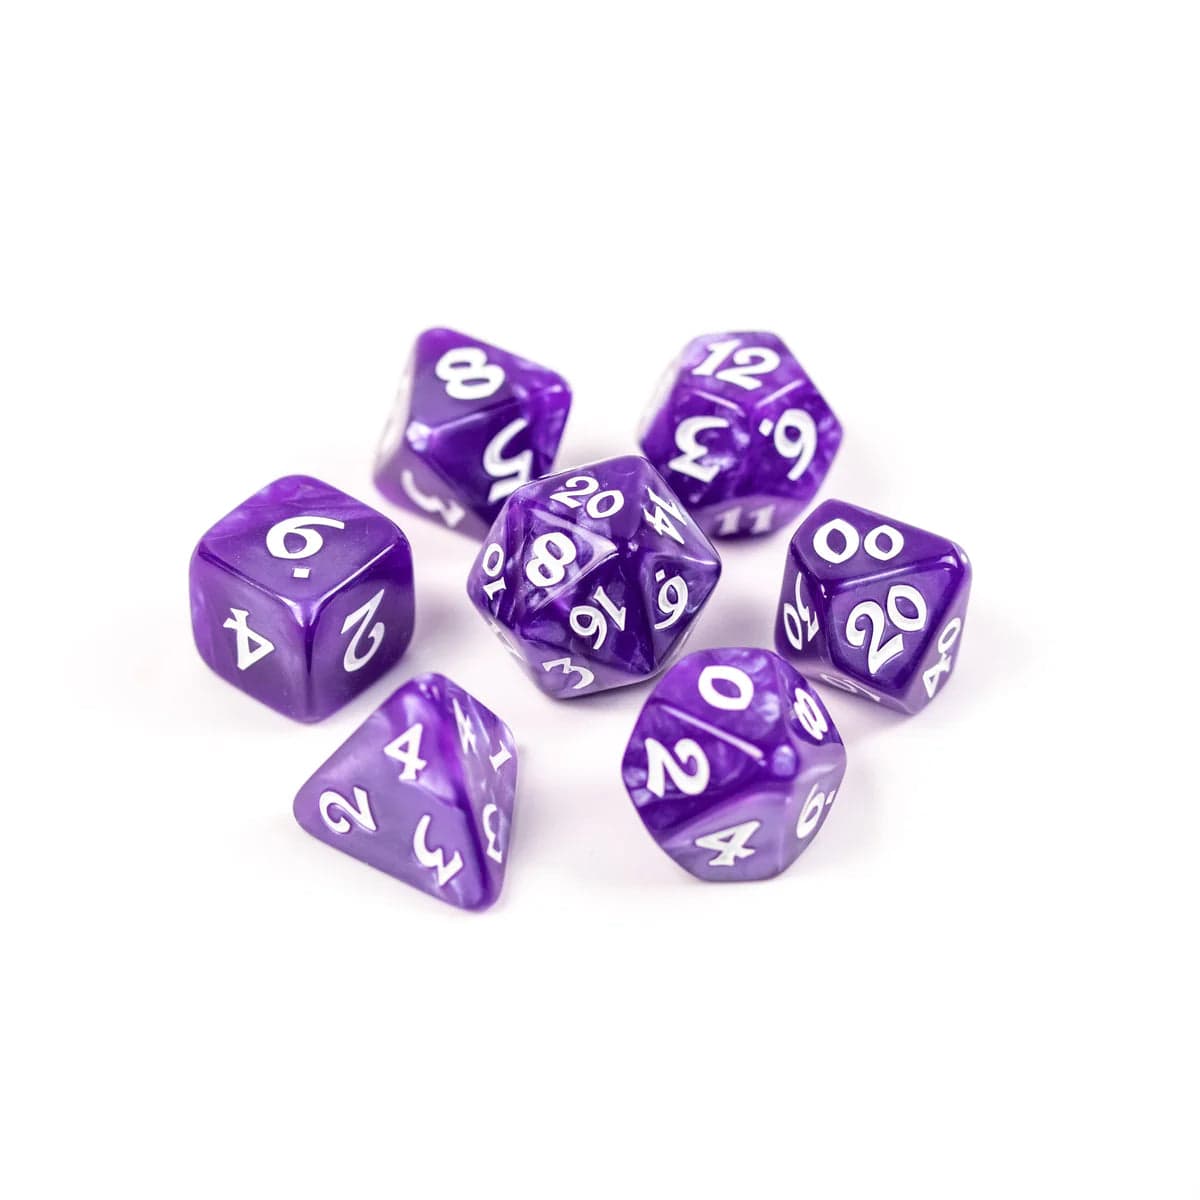 Die Hard Dice: 7pc RPG Set - Elessia Essentials, Purple with White